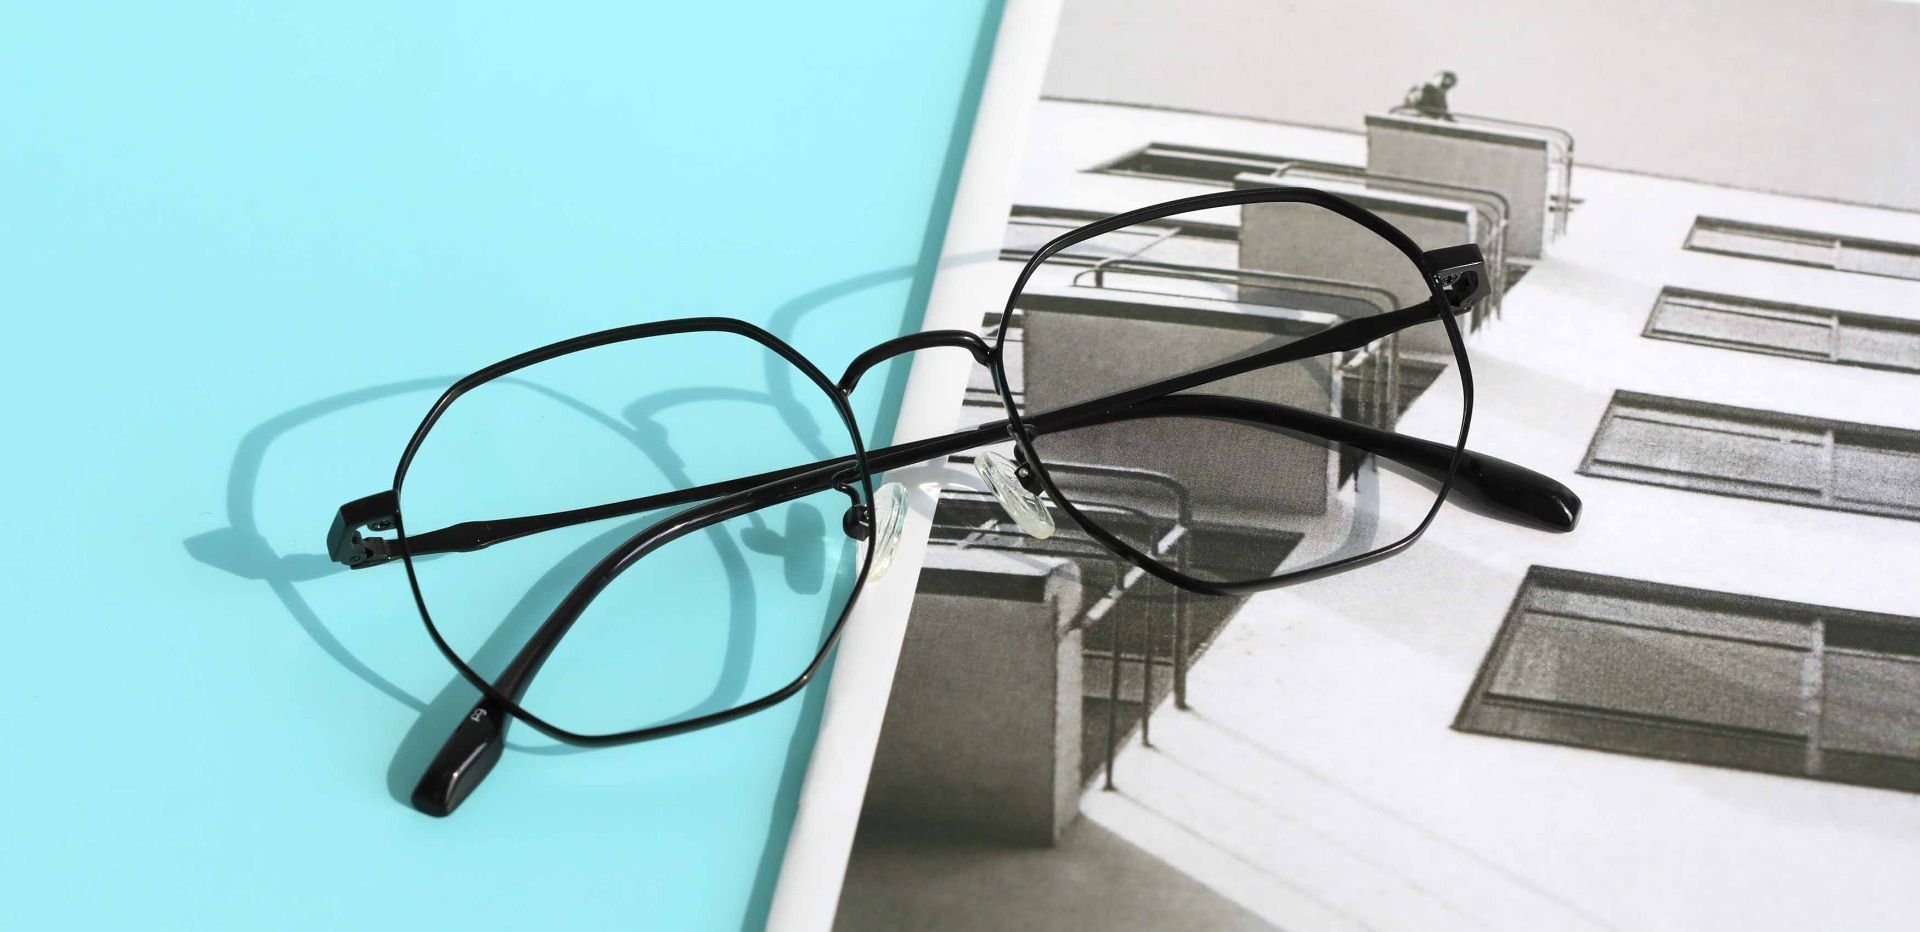 Cowan Geometric Eyeglasses Frame - Black